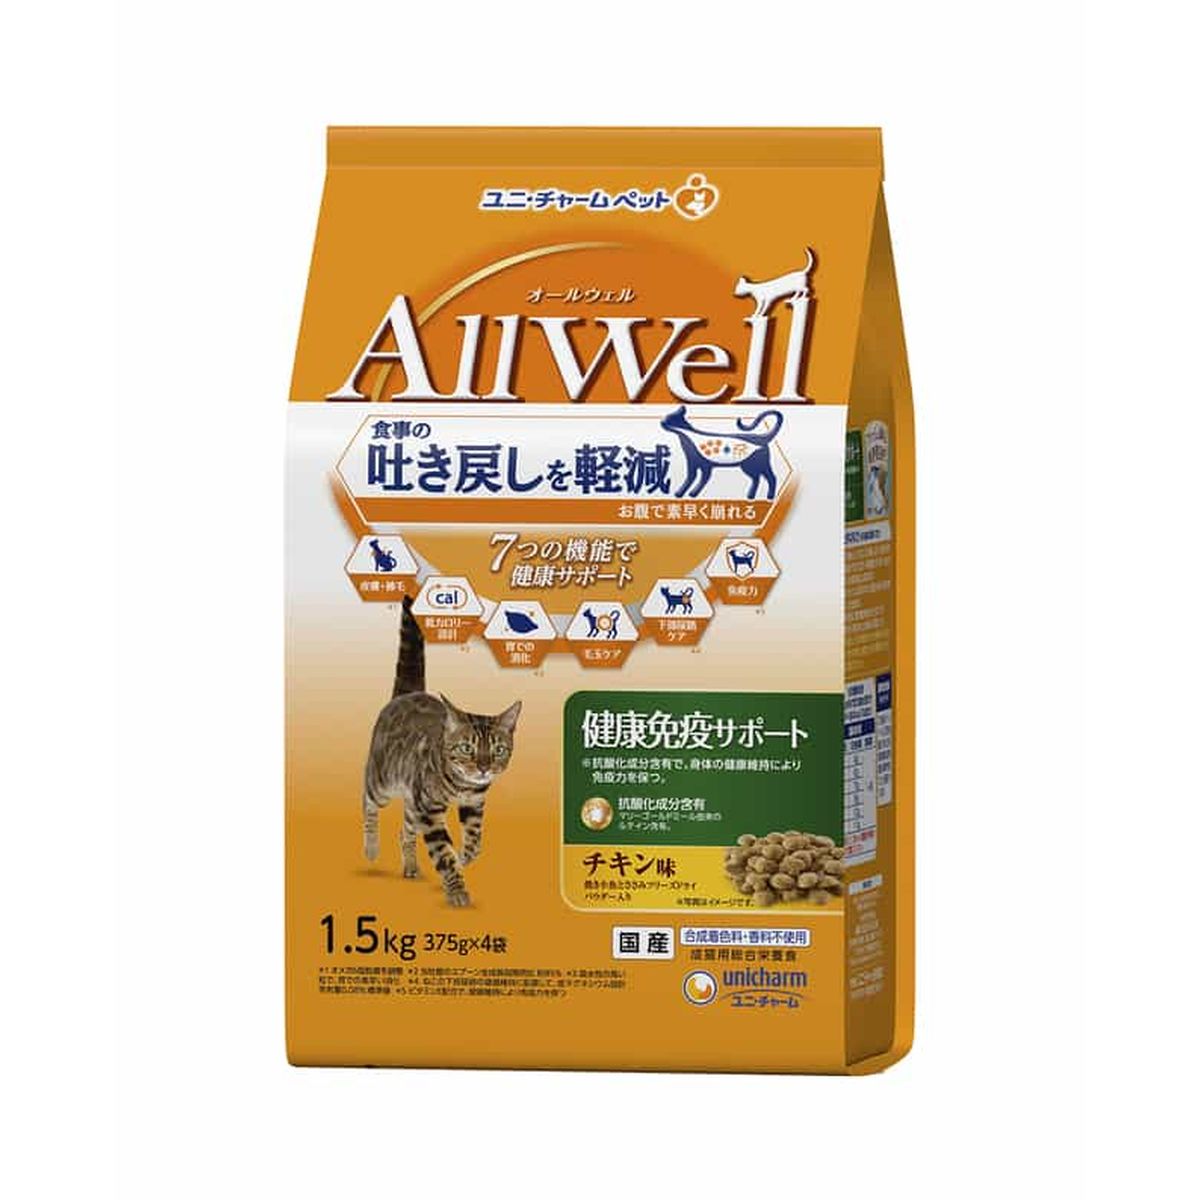 AllWell健康免疫サポートチキン味挽キ小魚トササミフリーズドライパウダー入リ 1.5kg×5